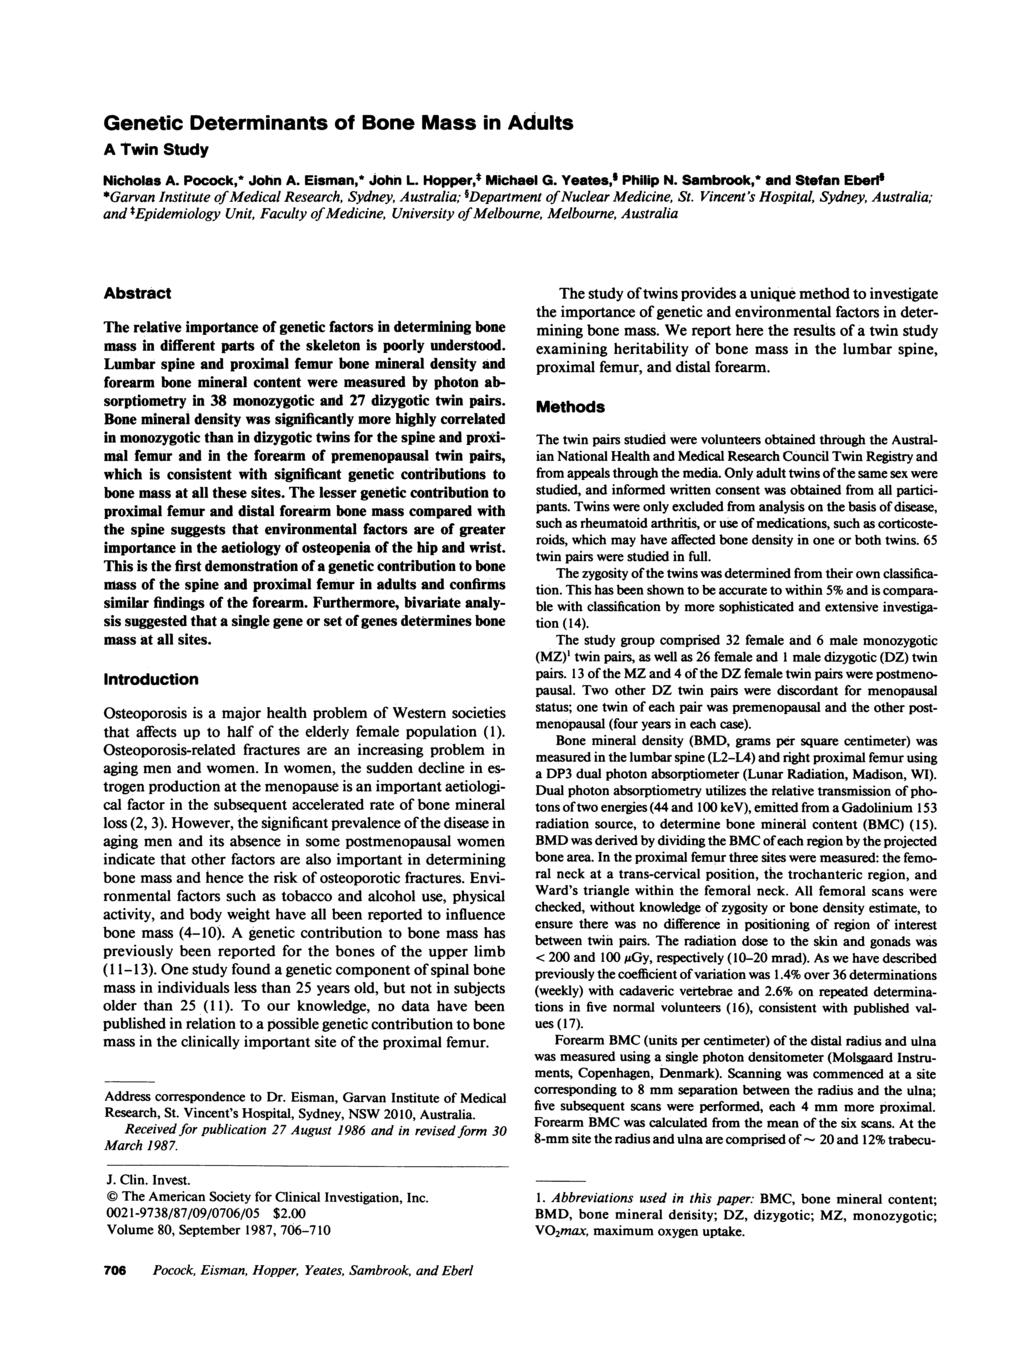 Genetic Determinnts of Bone Mss in Adults A Twin Study Nichols A. Pocock,* John A. ismn,* John L. Hopper,* Michel G. Yetes,1 Philip N.